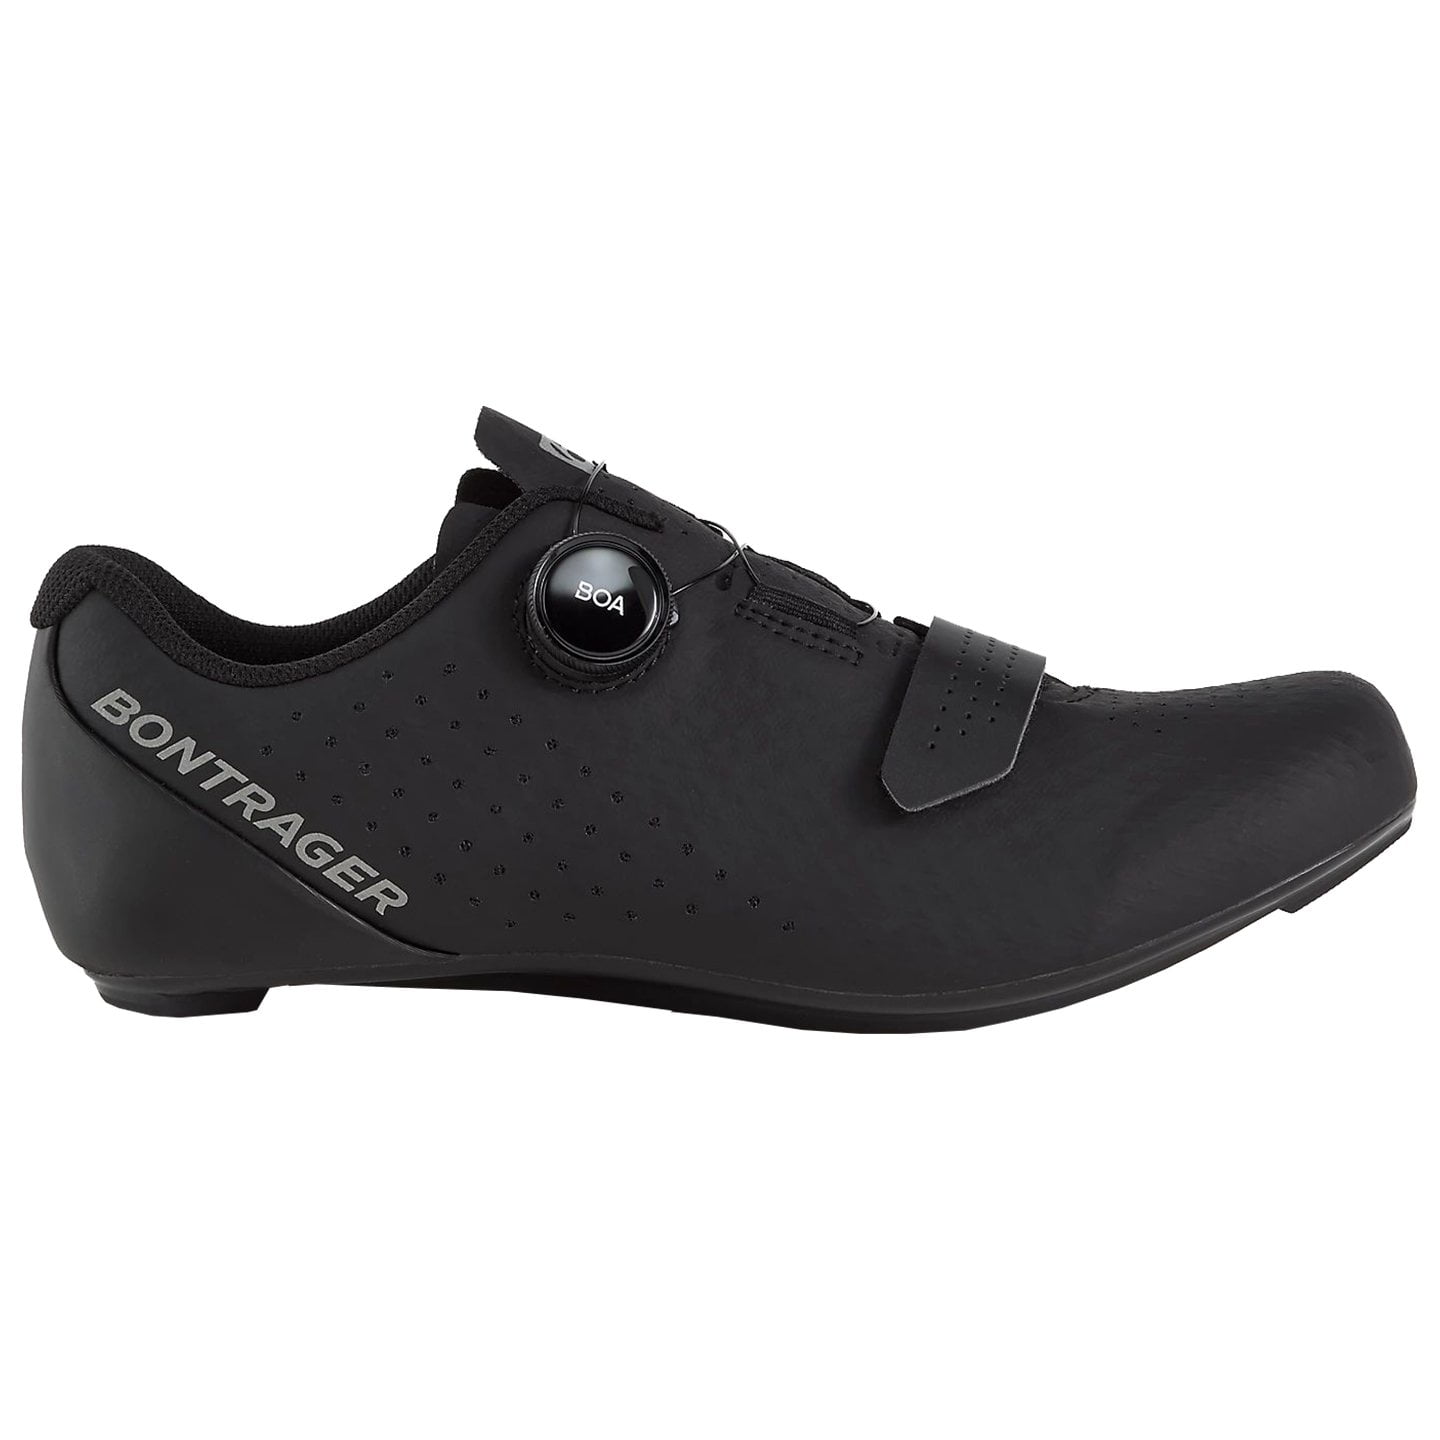 BONTRAGER Circuit Road Bike Shoes Road Shoes, for men, size 44, Cycling shoes